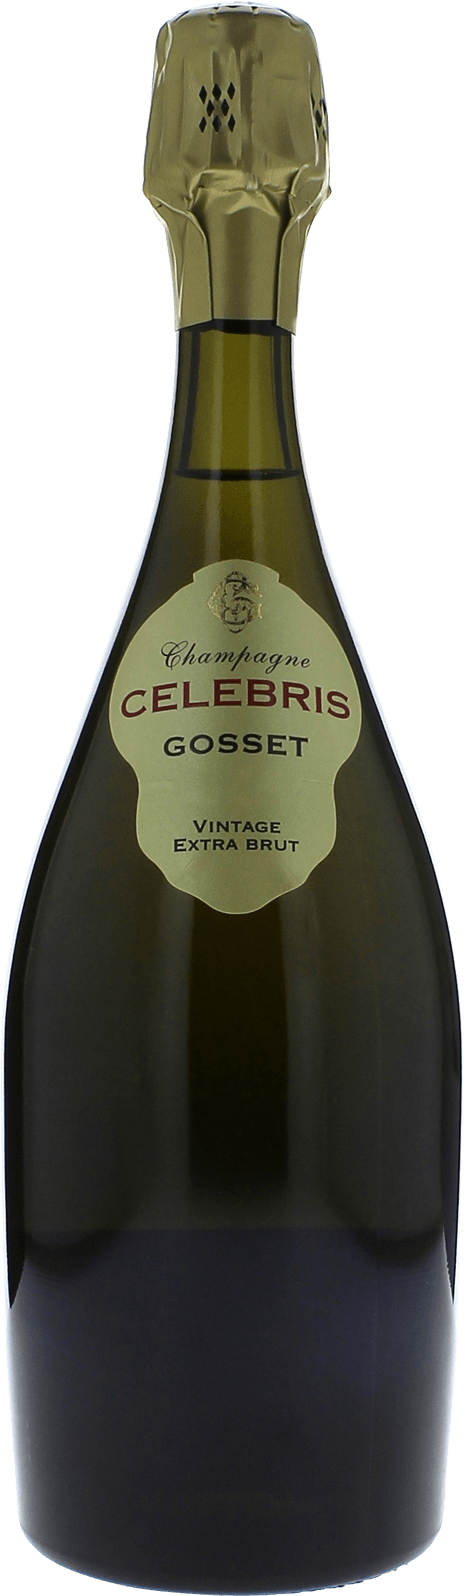 Gosset celebris extra brut 2007  Gosset, Champagne